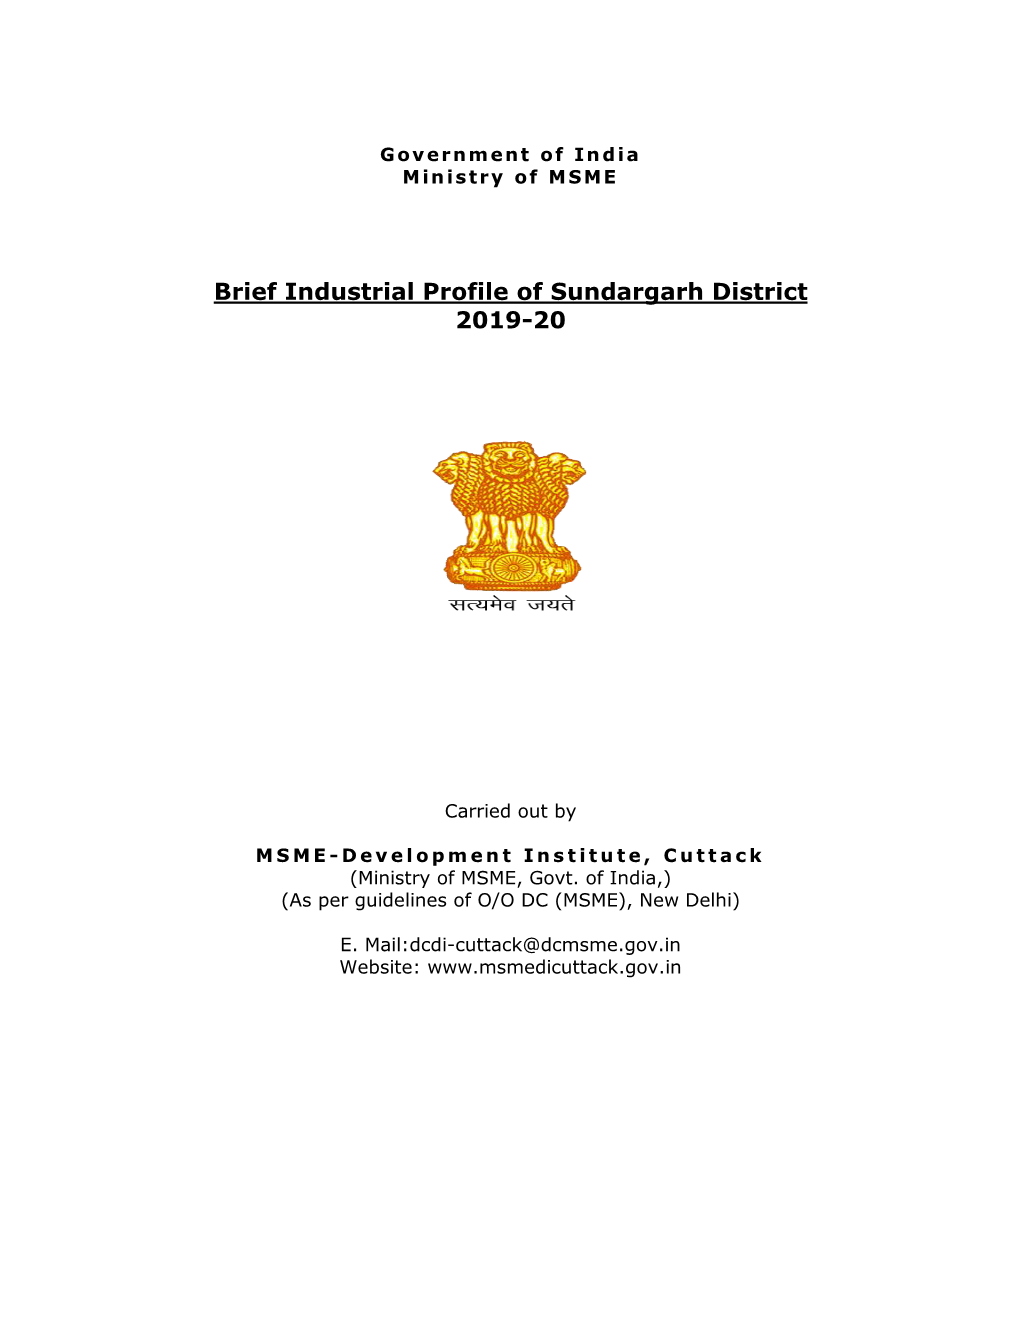 Brief Industrial Profile of Sundargarh District 2019-20